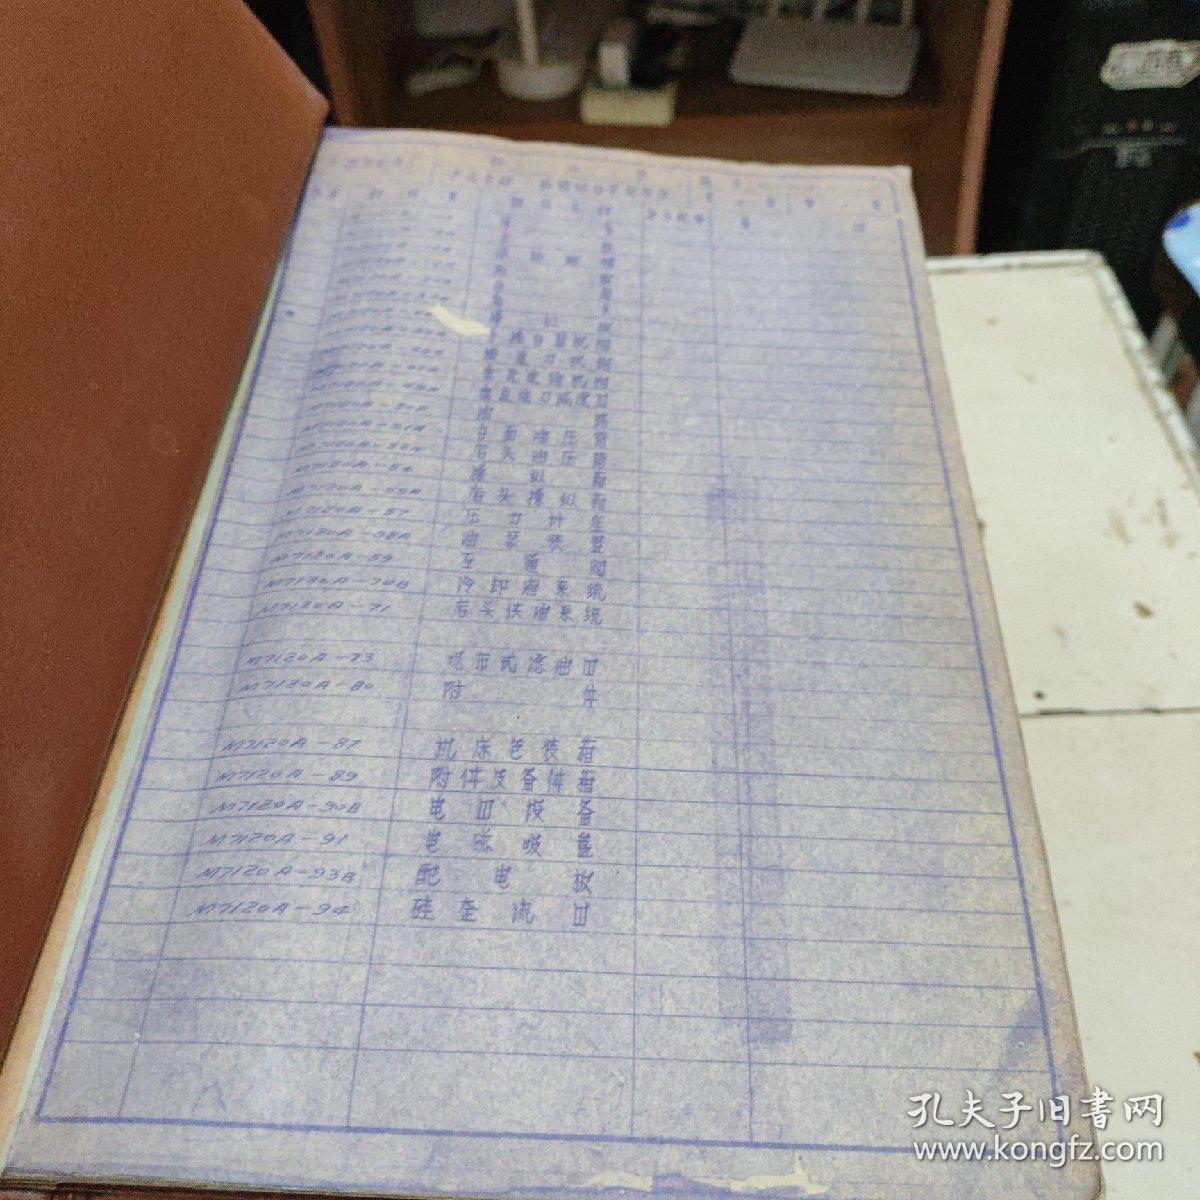 M7120A卧轴矩台平面磨床1、2、3、4、5、7、8七册合售
老图纸，晒图。